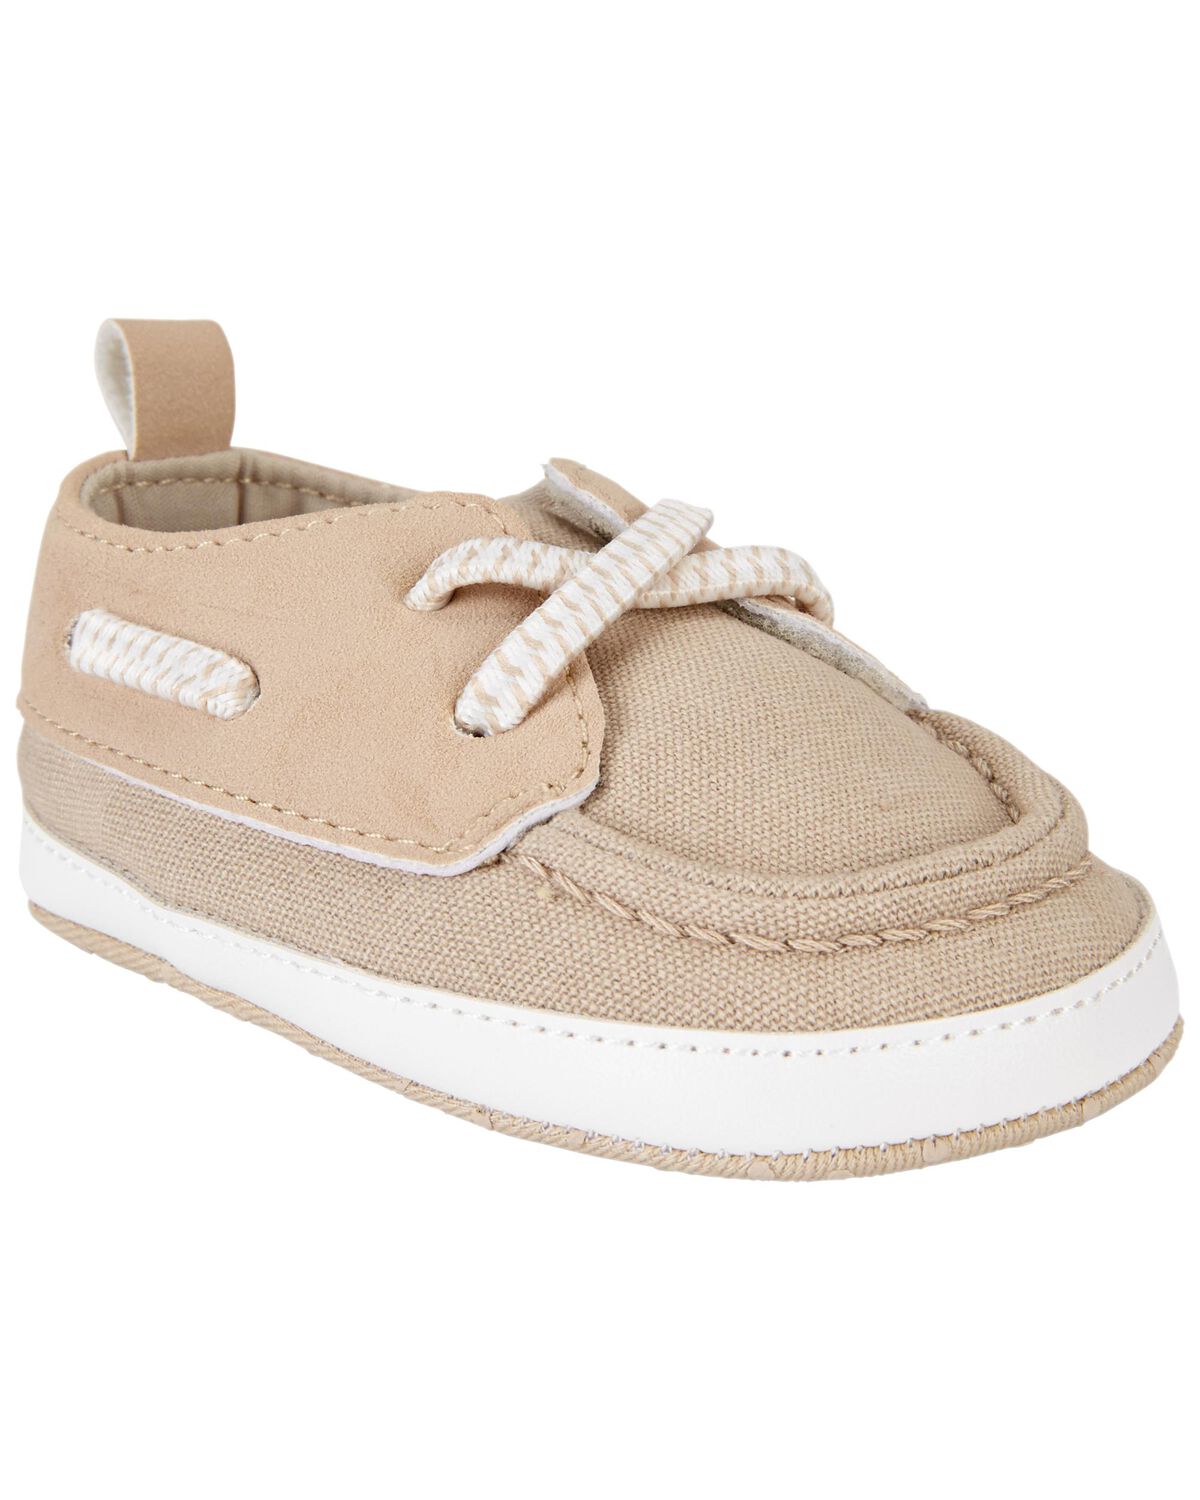 Khaki Baby Soft Boat Shoe | carters.com